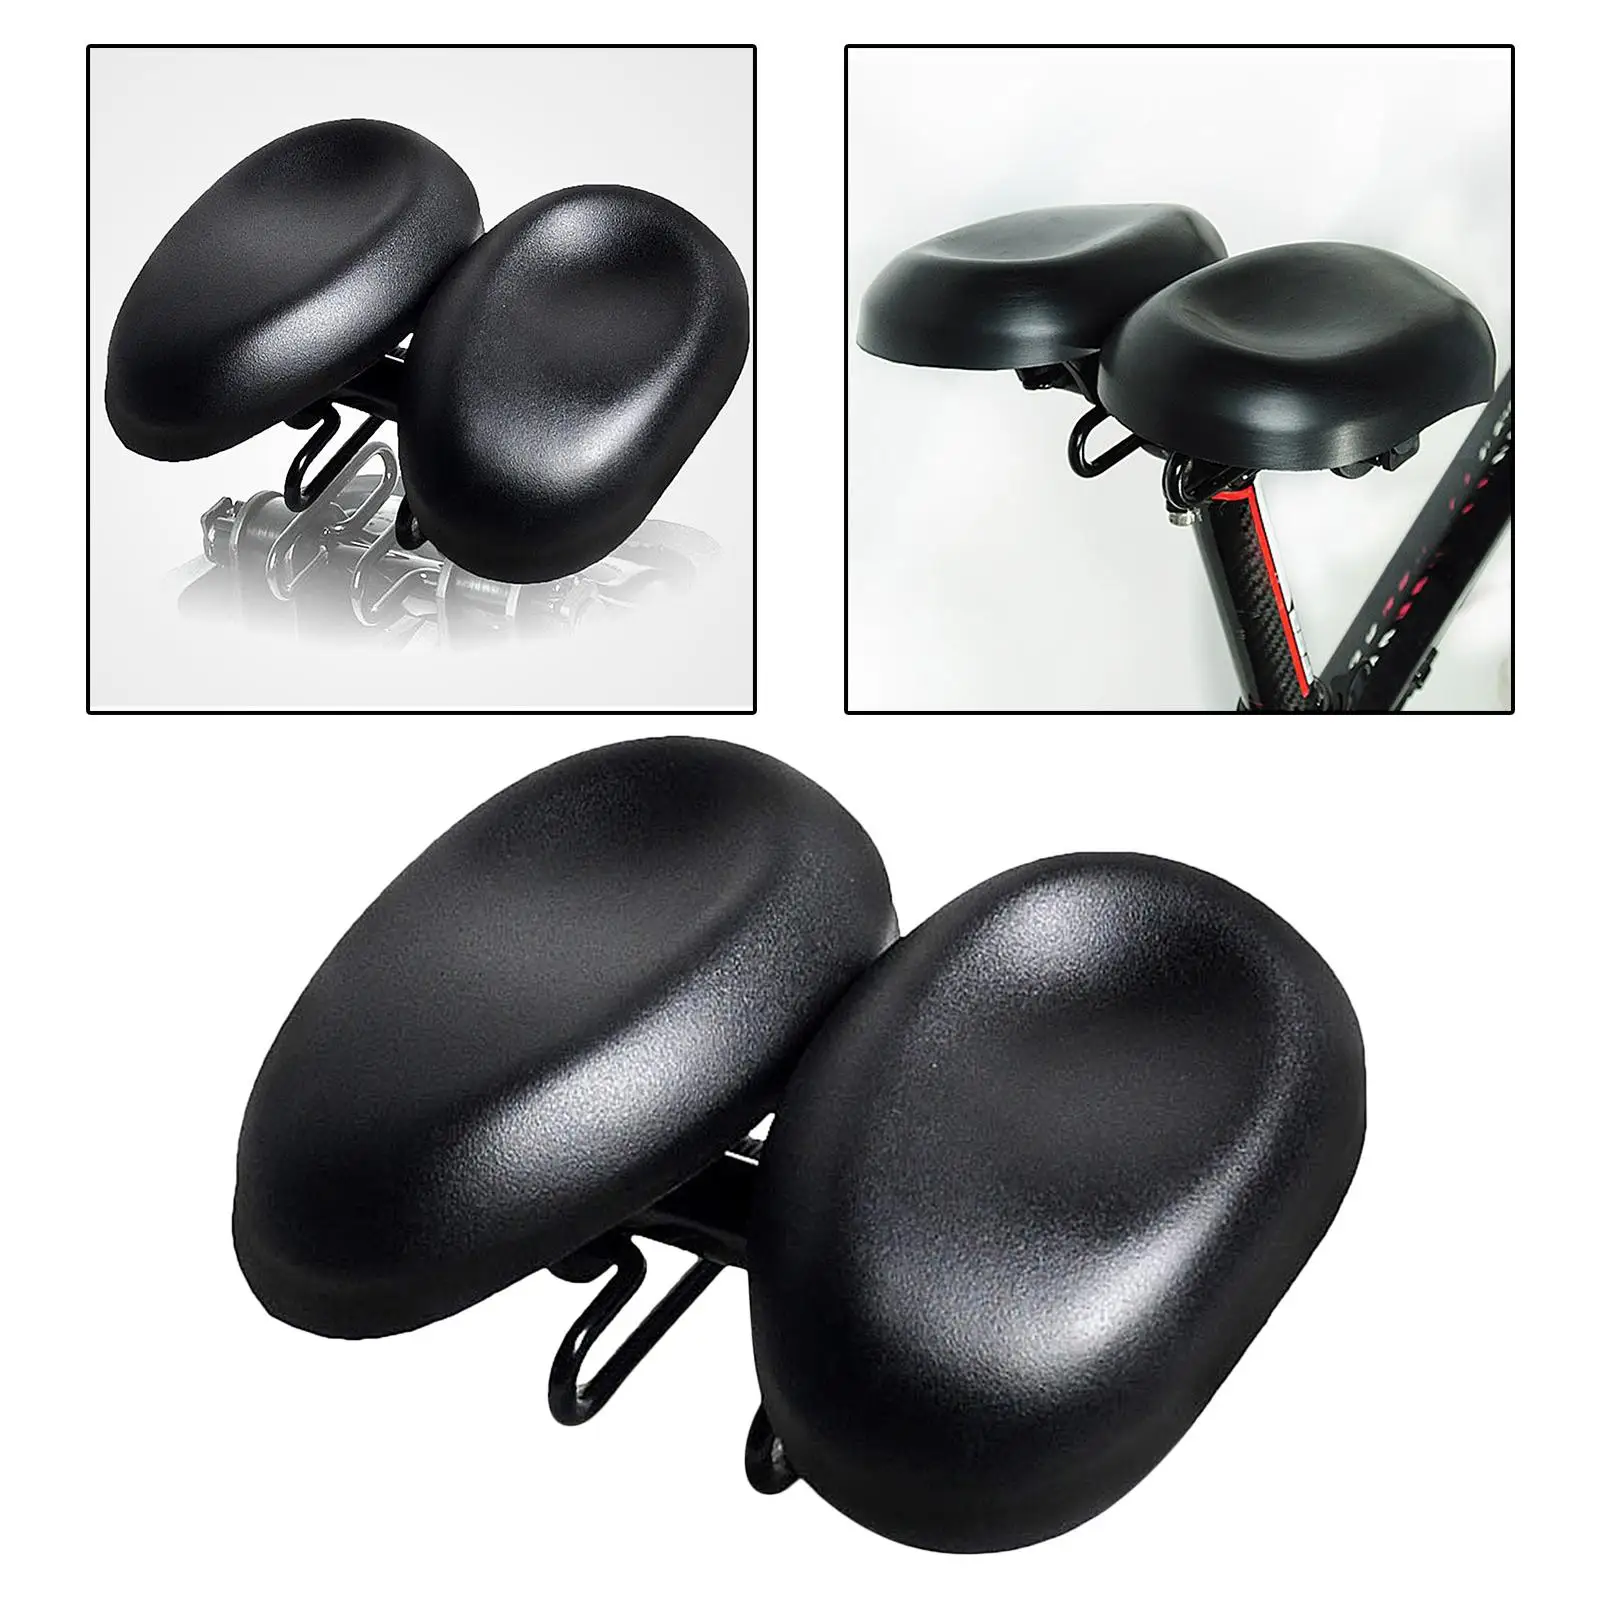 Ergonomic Bike Saddle Seat Cushion Cover Parts for MTB Road Cycling